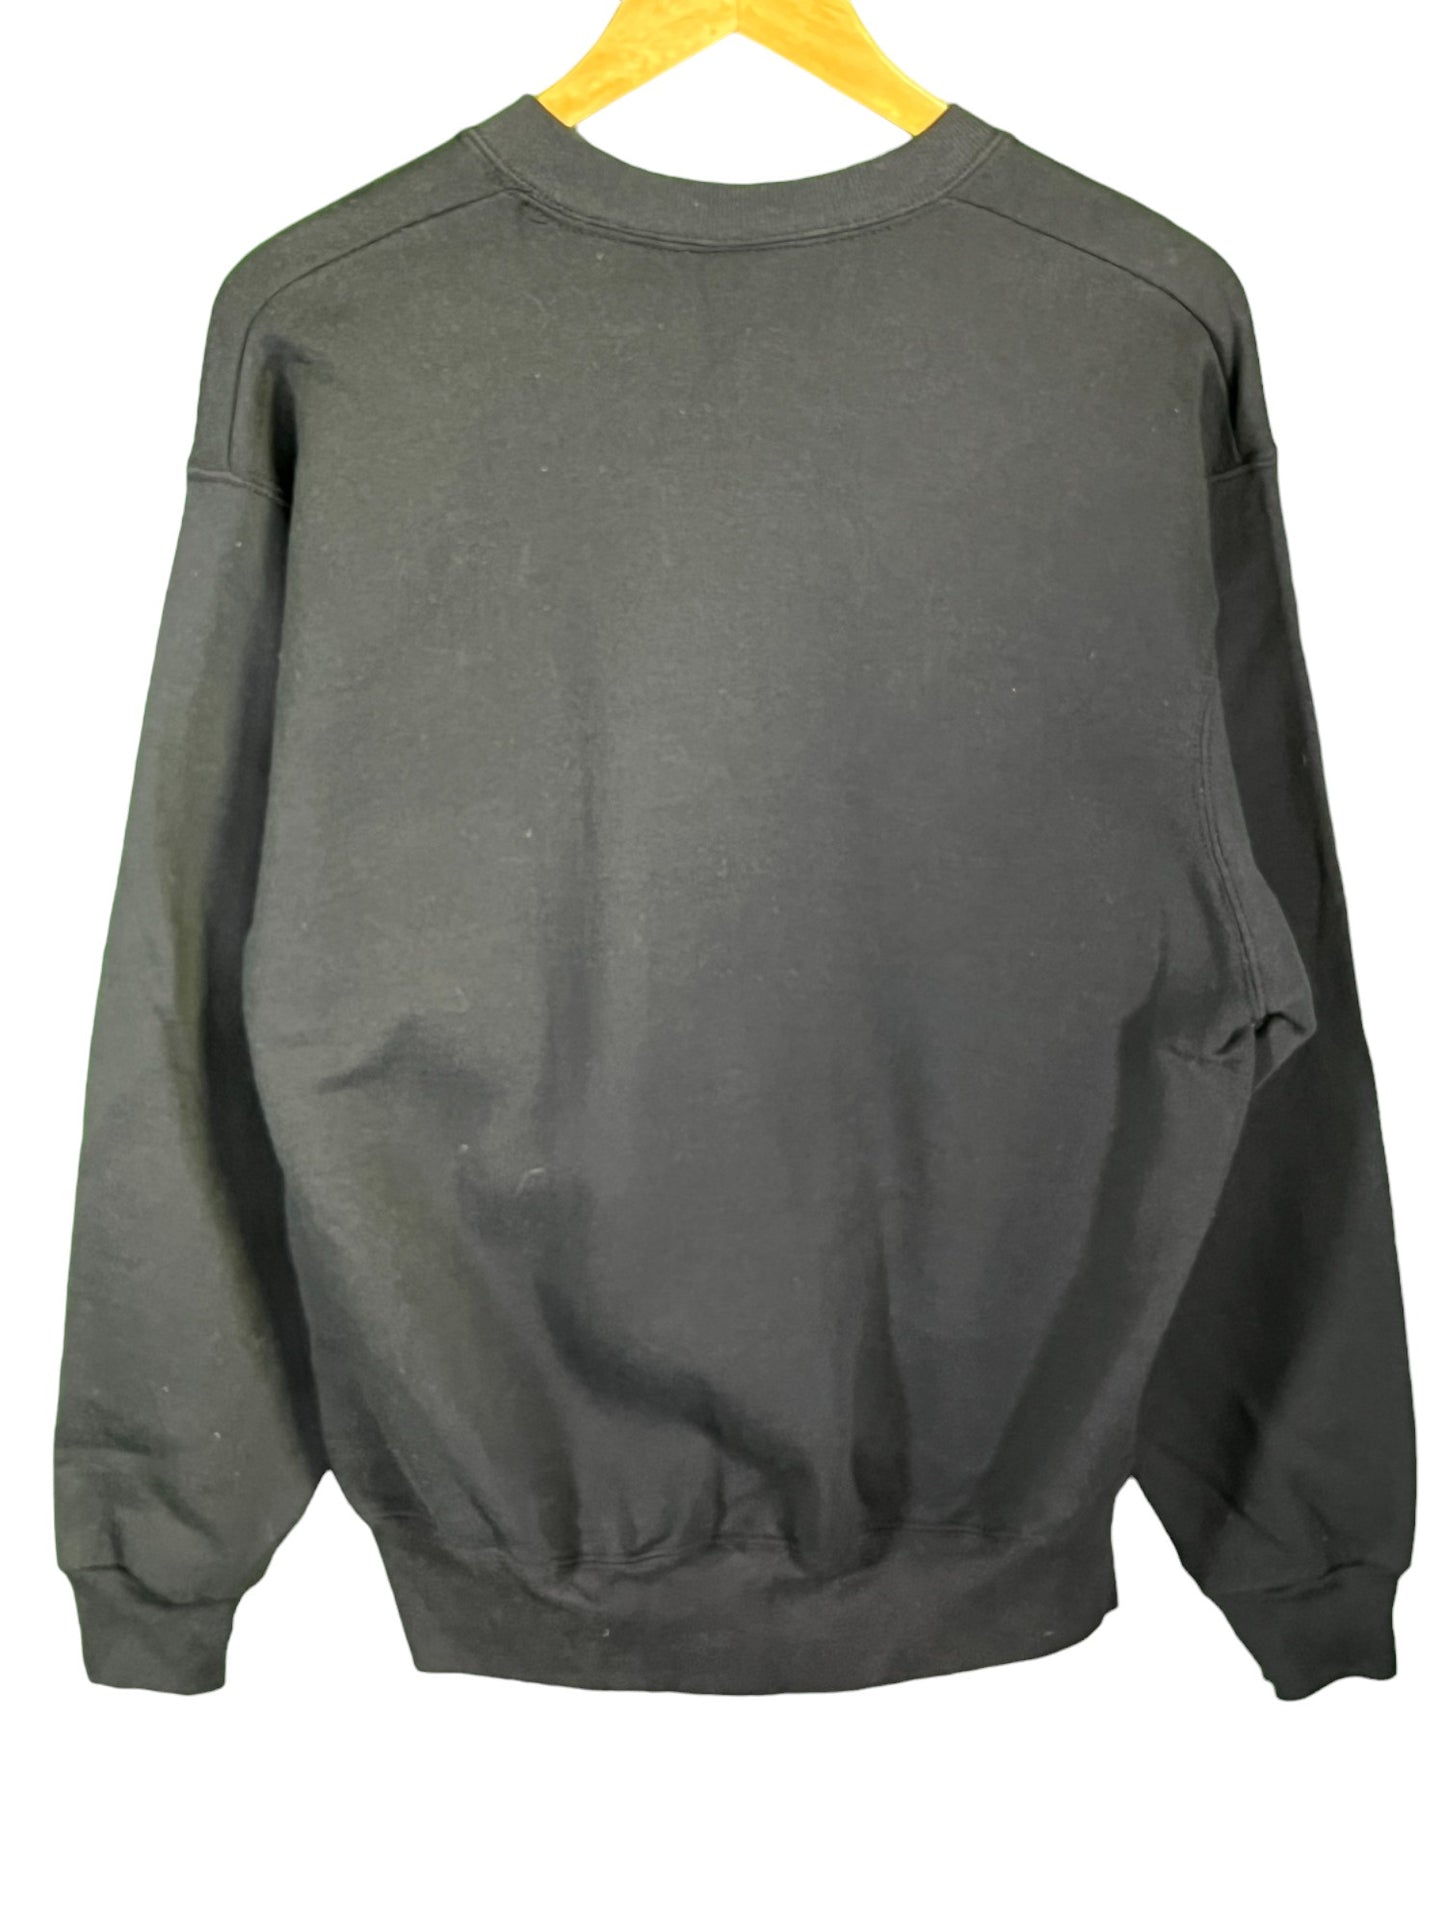 Vintage 90's BVD Black Blank Crewneck Sweater Size Medium